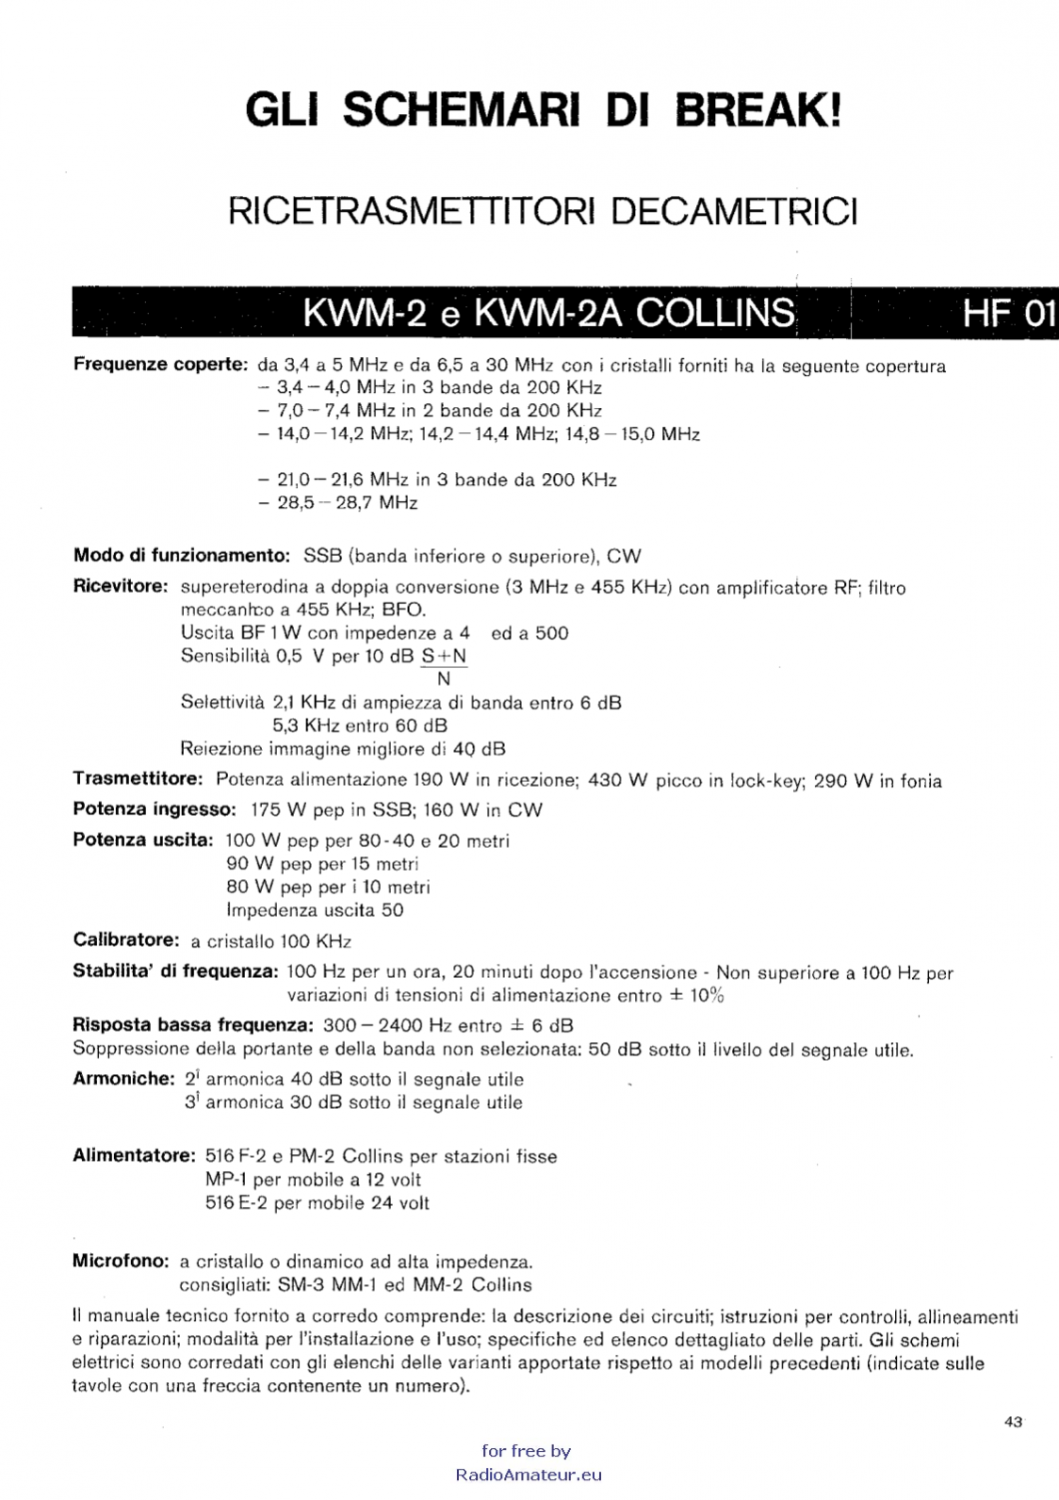 Collins KWM-2A Transceiver - Schematic Diagram 1 (Italian)